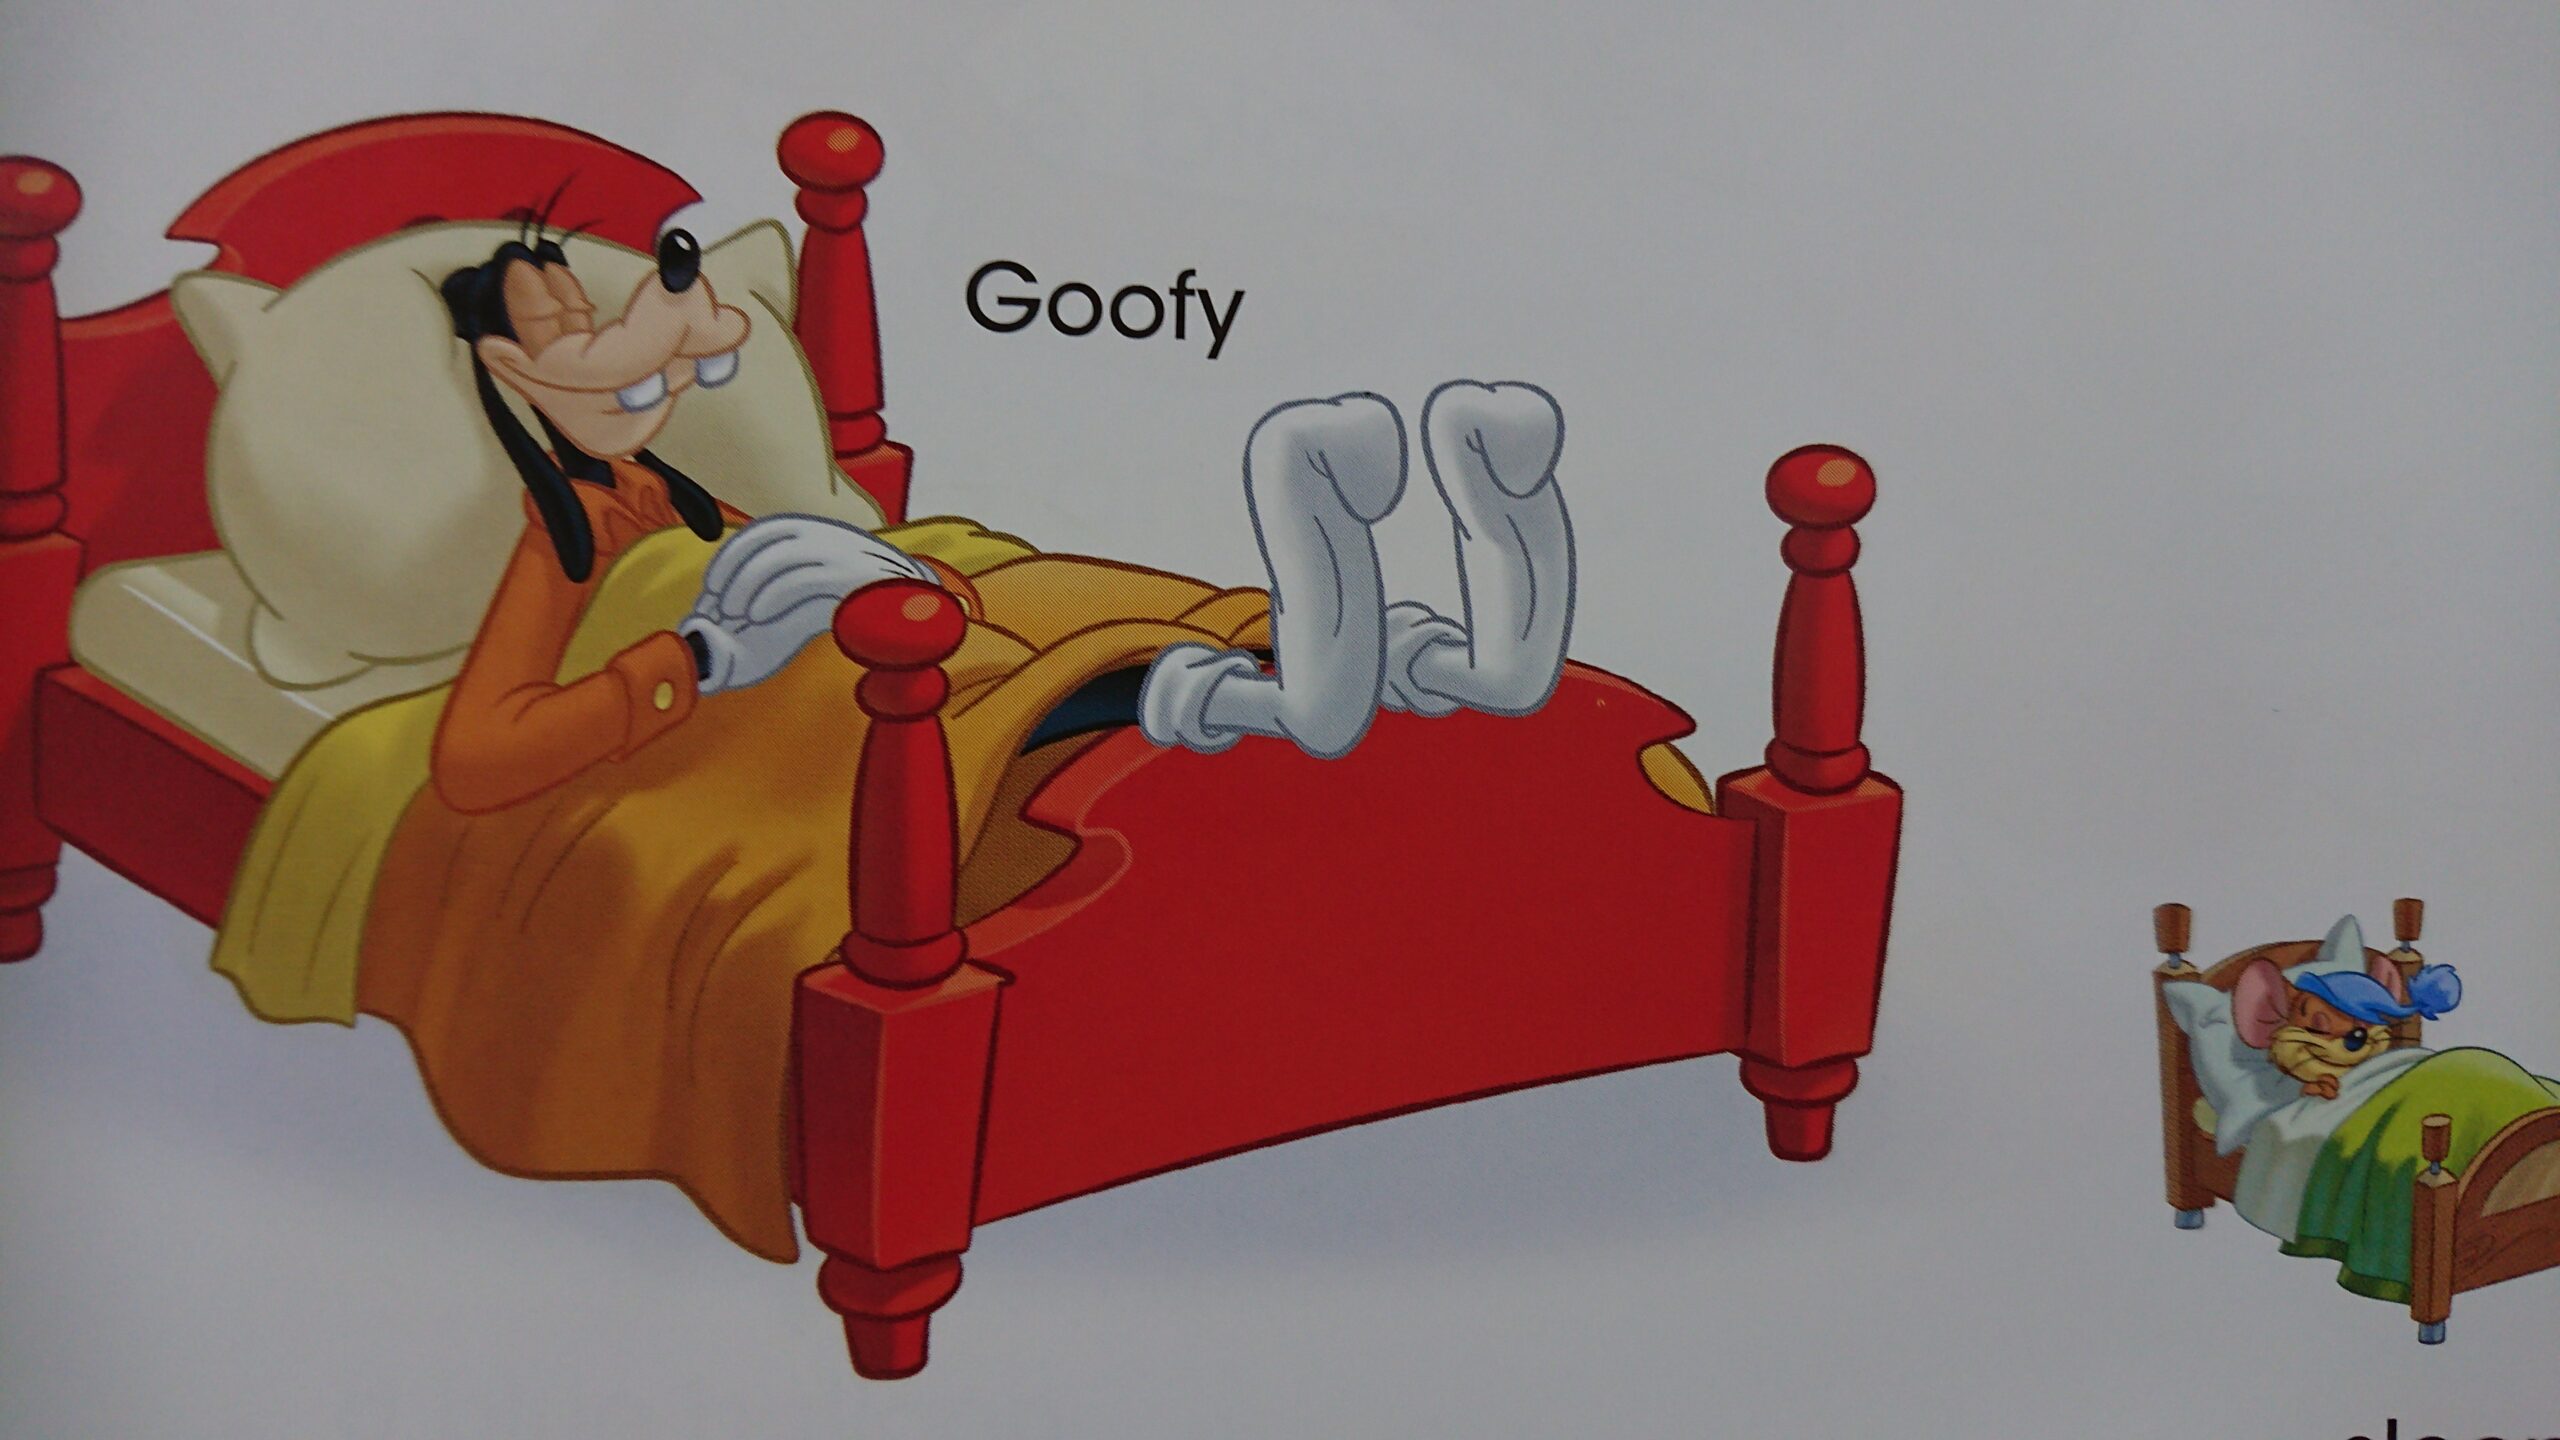 Goofy Is Sleeping In A Red Bed の歌詞の意味と英語教育に良いポイント きゅーらむぶろぐ